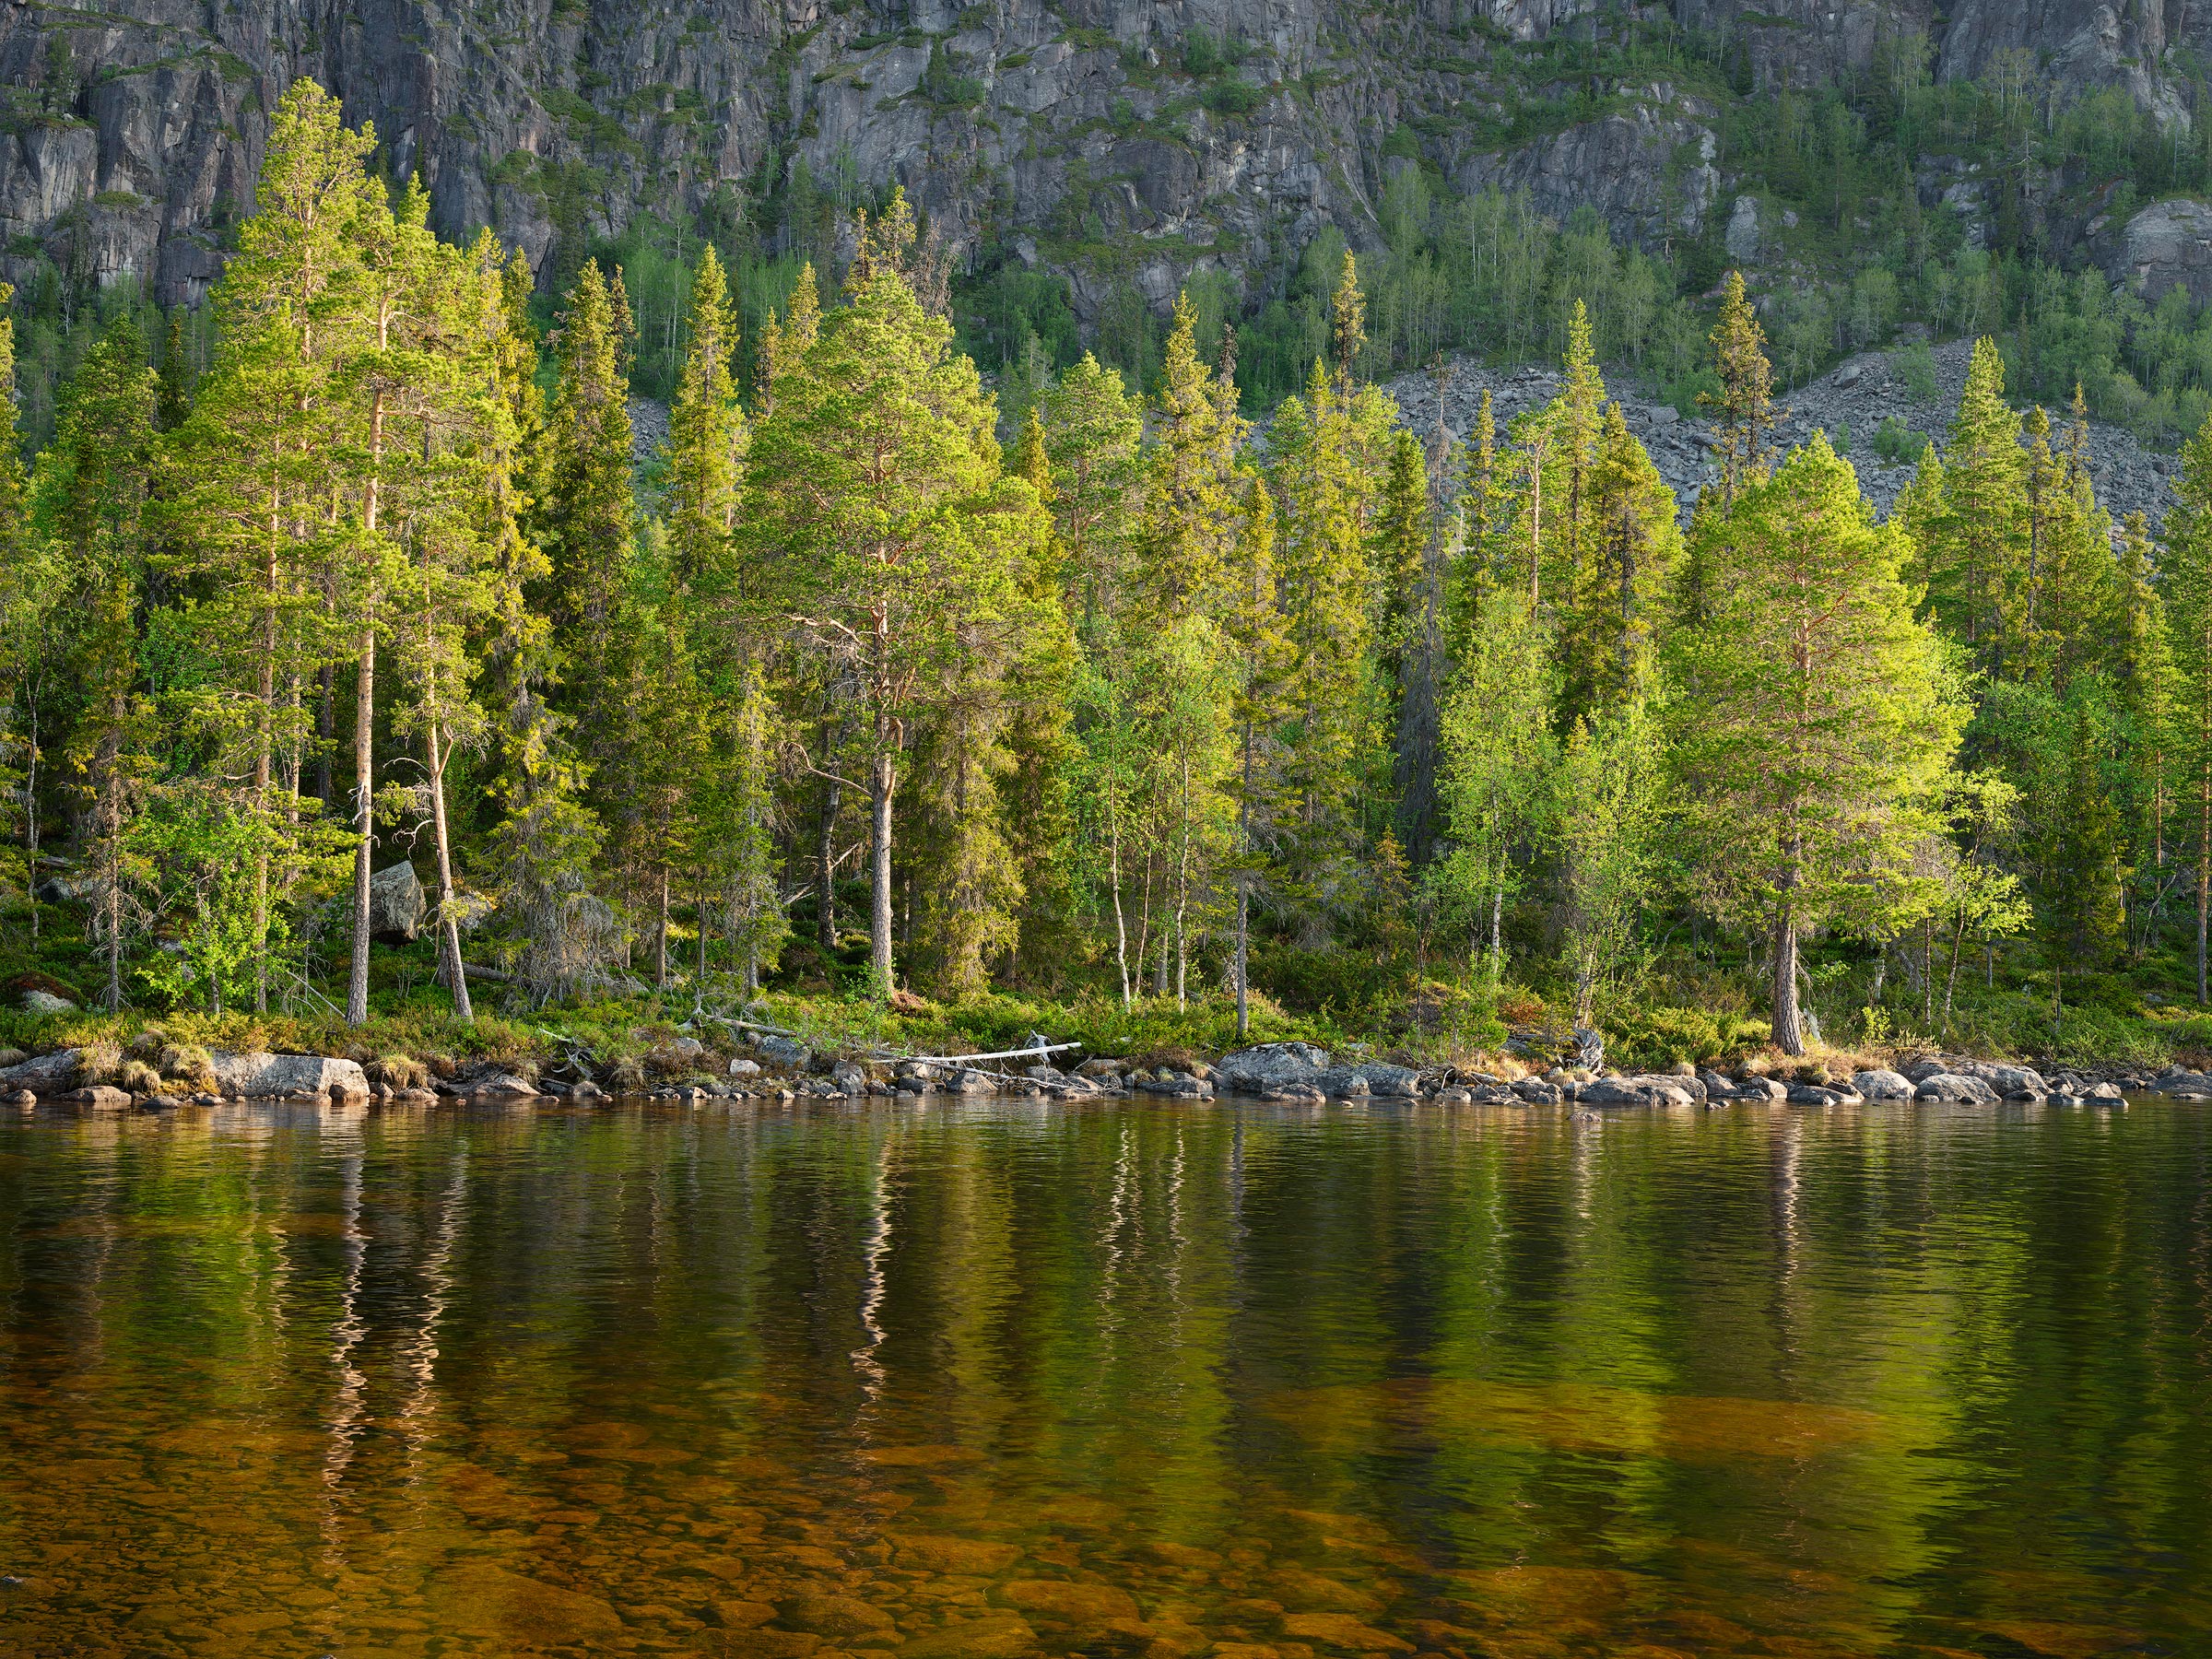 Pine tree forest in Pärlälvens Nature Reserve near Jokkmokk in Lapland, Sweden.